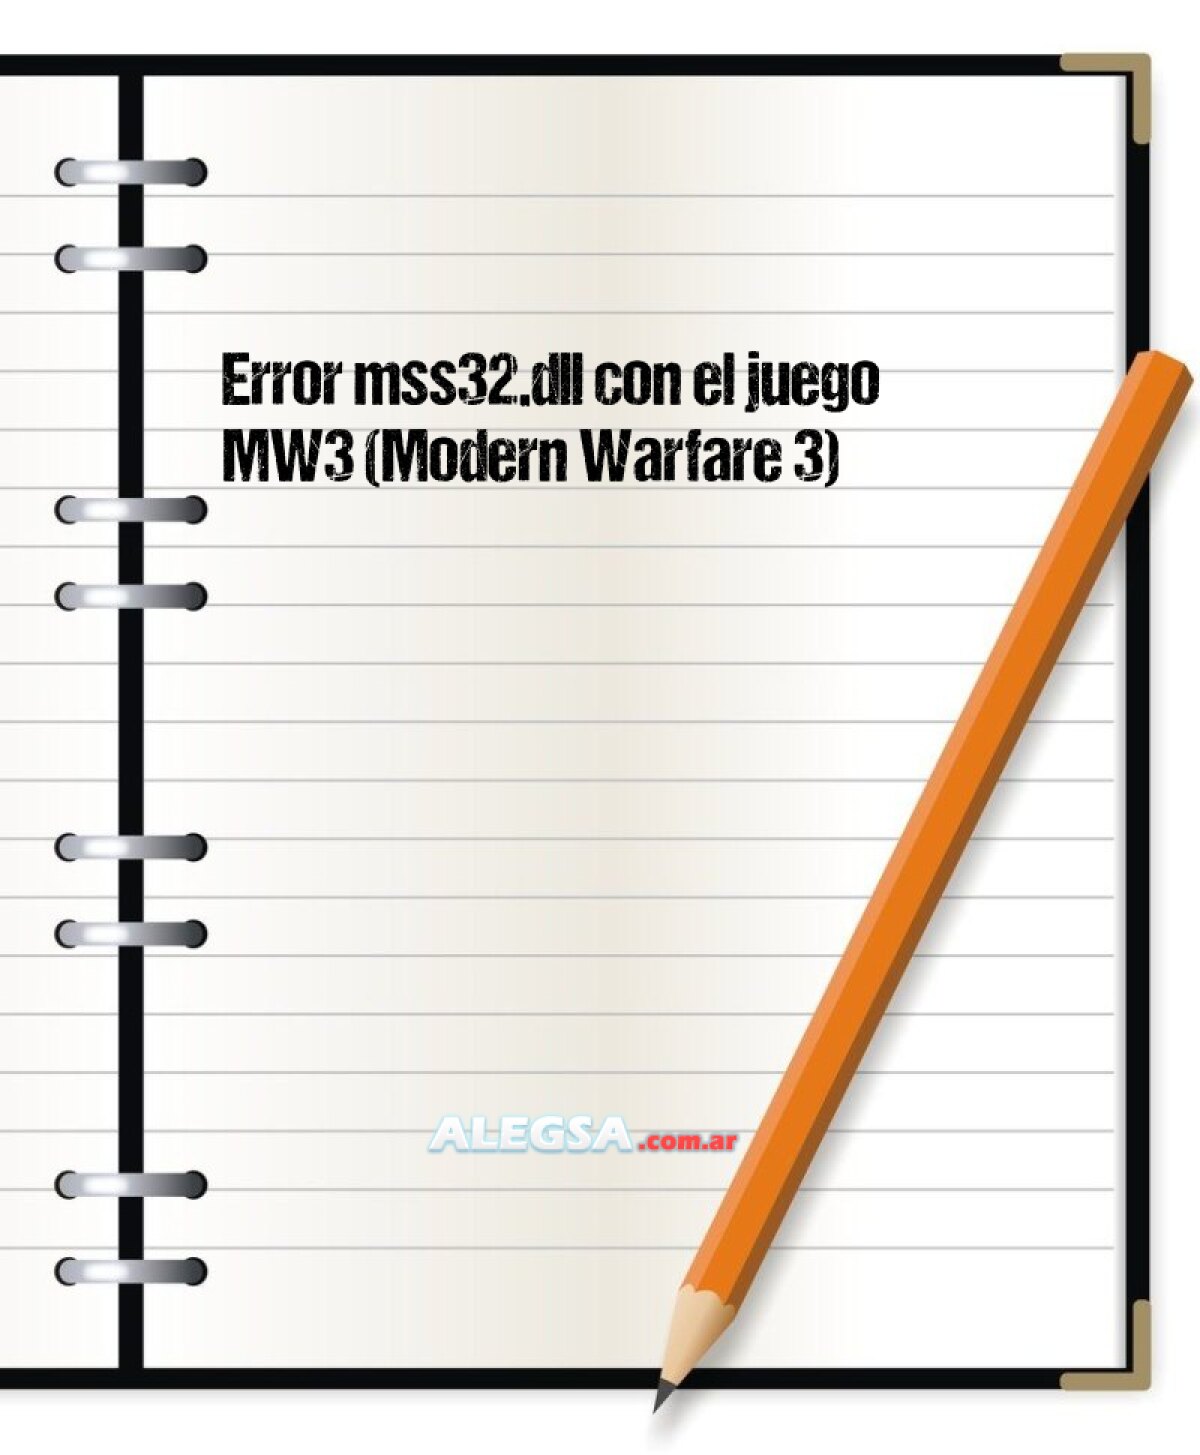 Error mss32.dll con el juego MW3 (Modern Warfare 3)